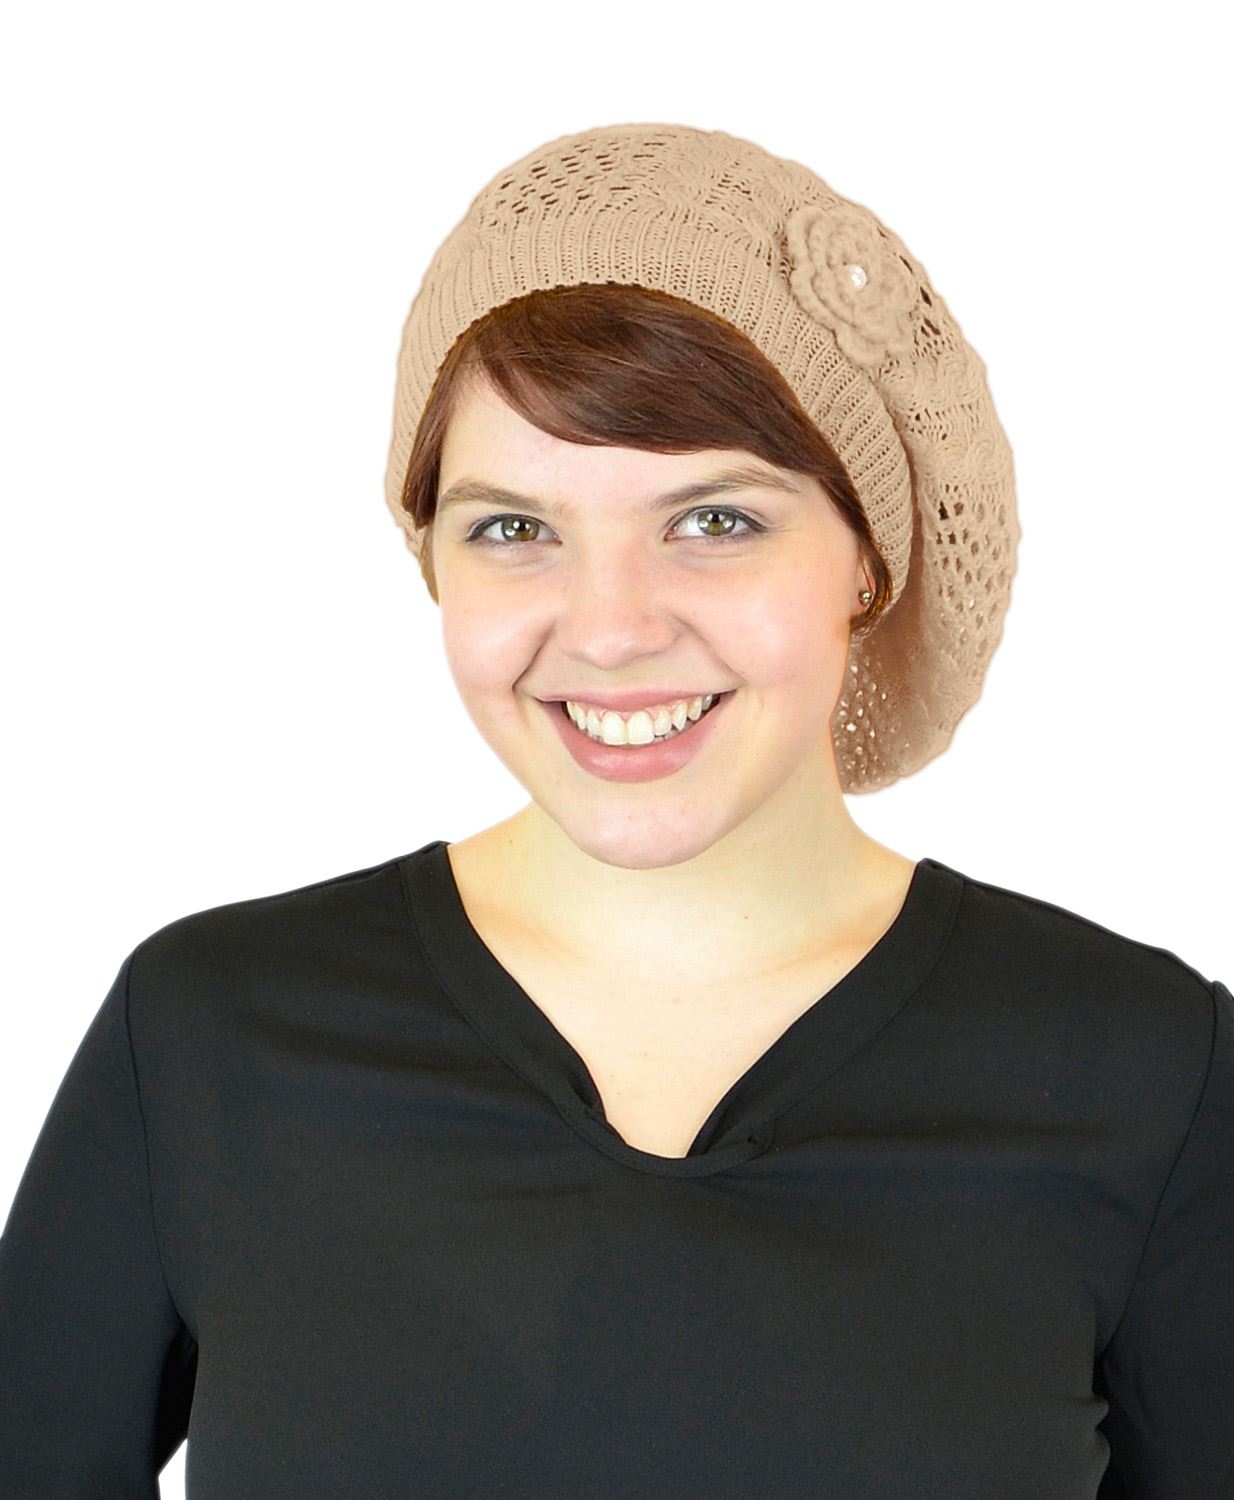 Belle Donne-Women's Mesh Crocheted Flower Accented Slouchy Beret Hat- Tan